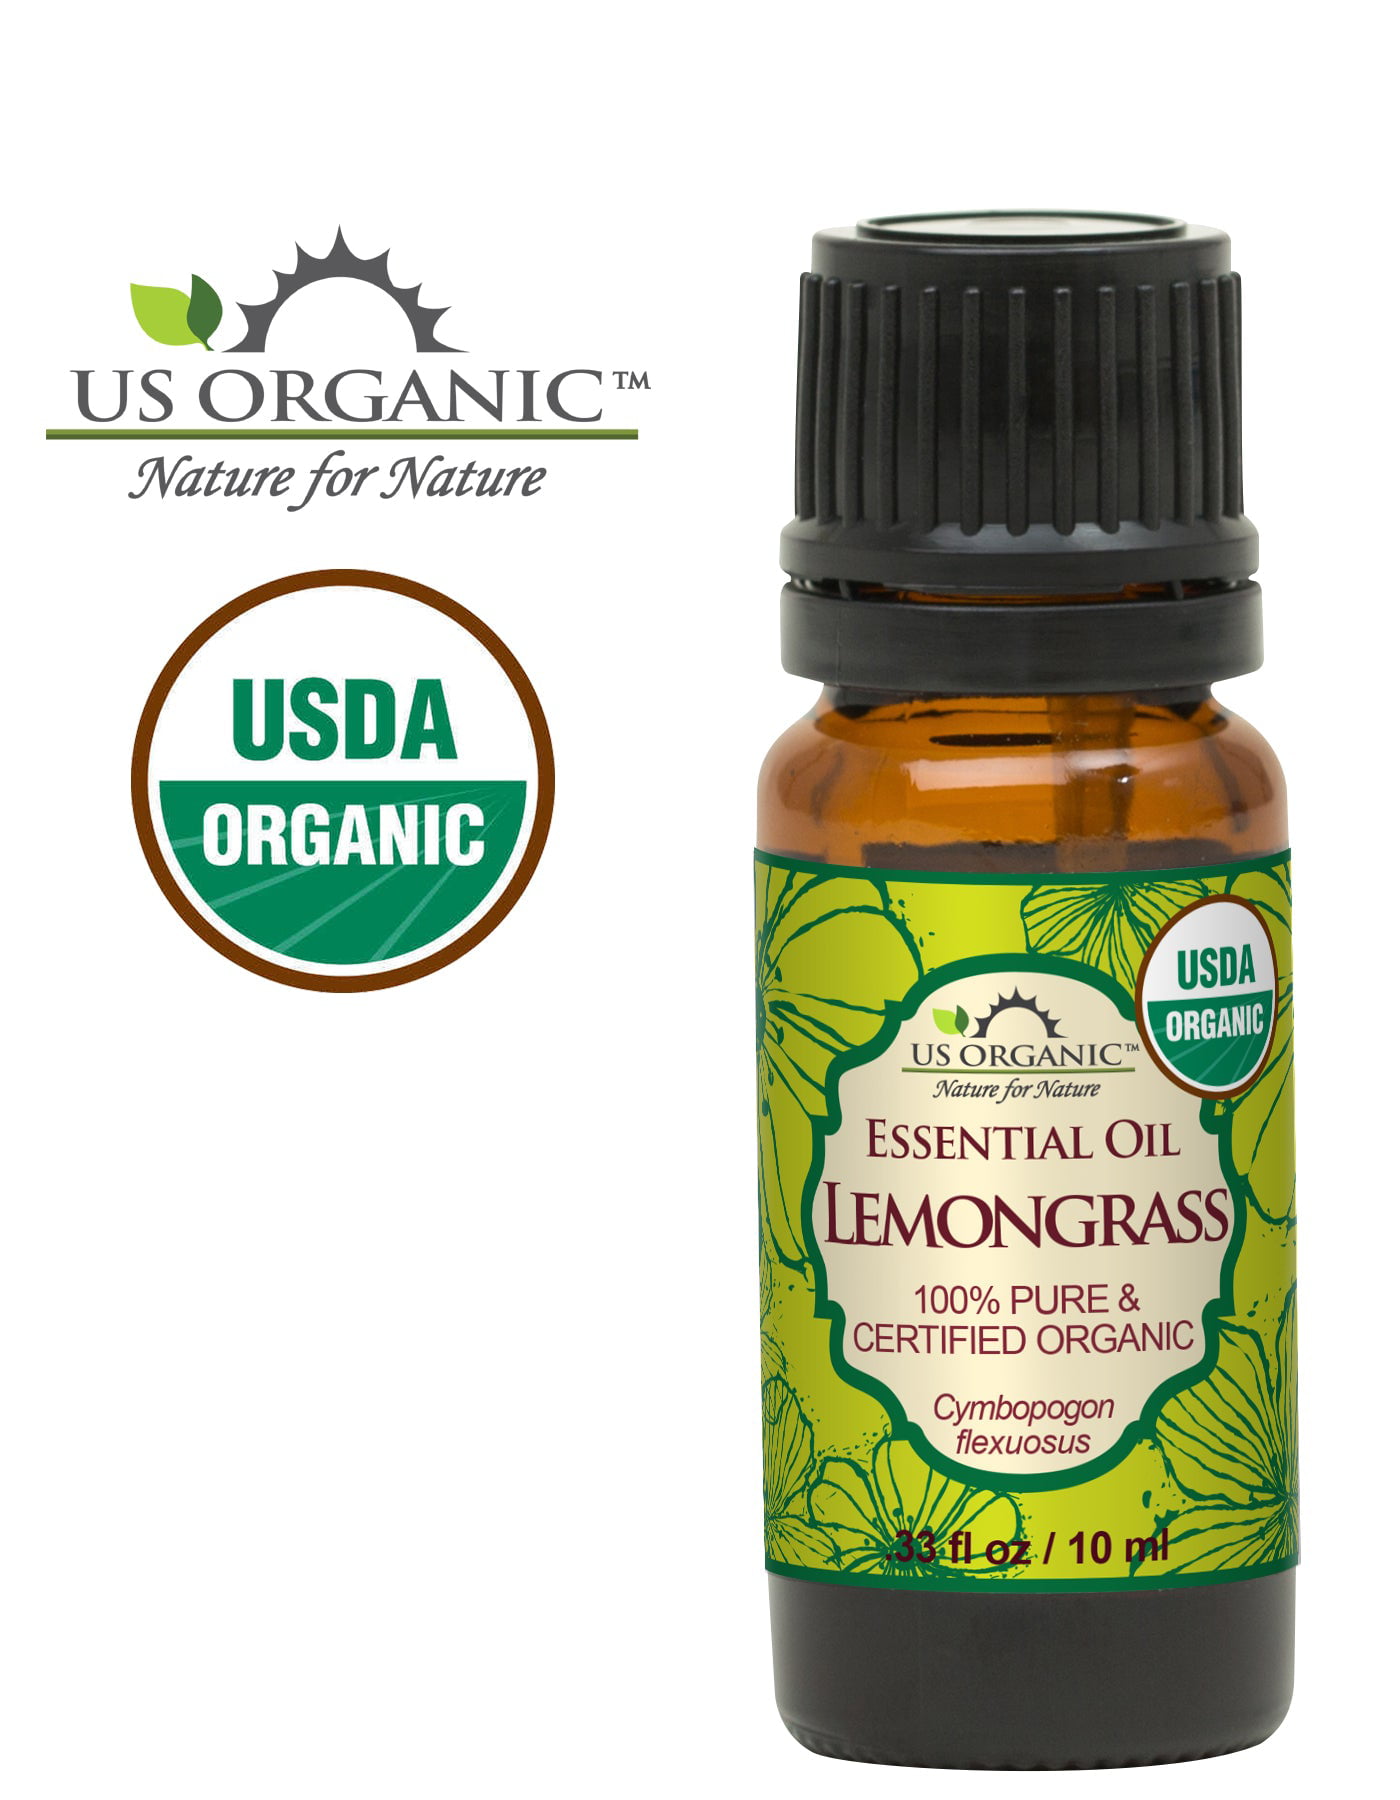 Cliganic 100% Pure Essential Oil Certified Organic Body Oil, Lemongrass,  0.33 fl oz, 10 ml - Food 4 Less